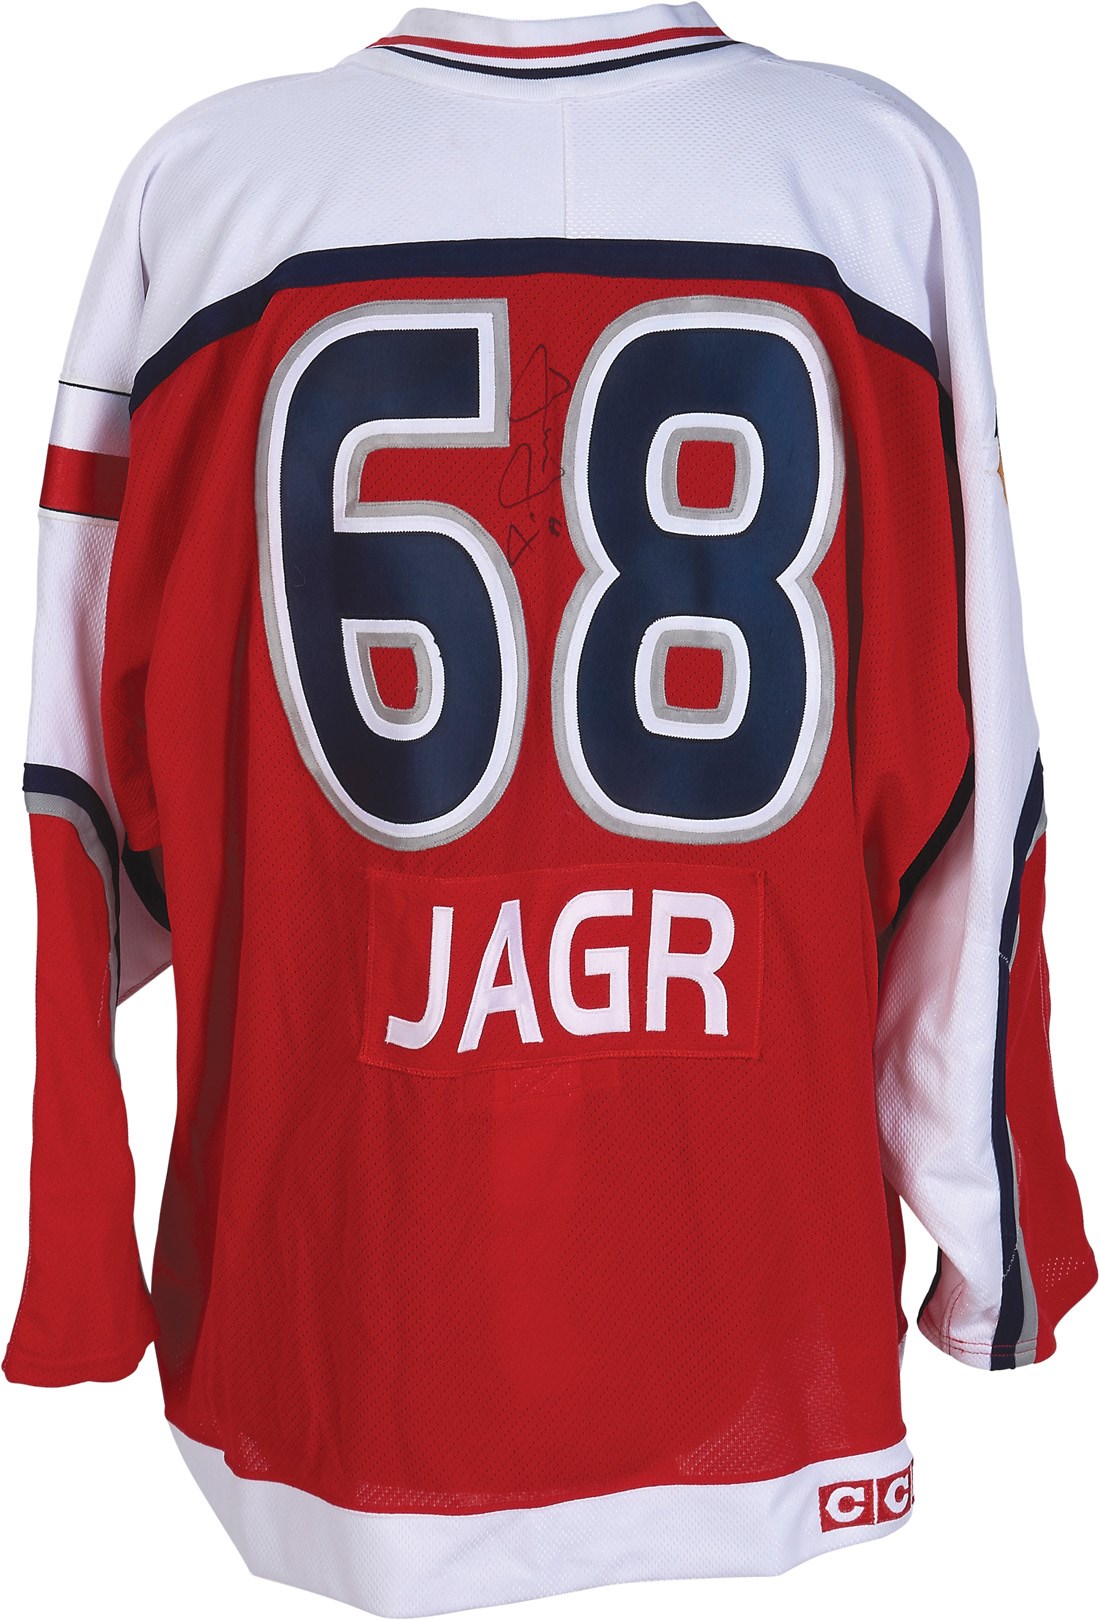 Hockey - 1999-2000 Jaromir Jagr All-Star Game Worn Uniform and Helmet